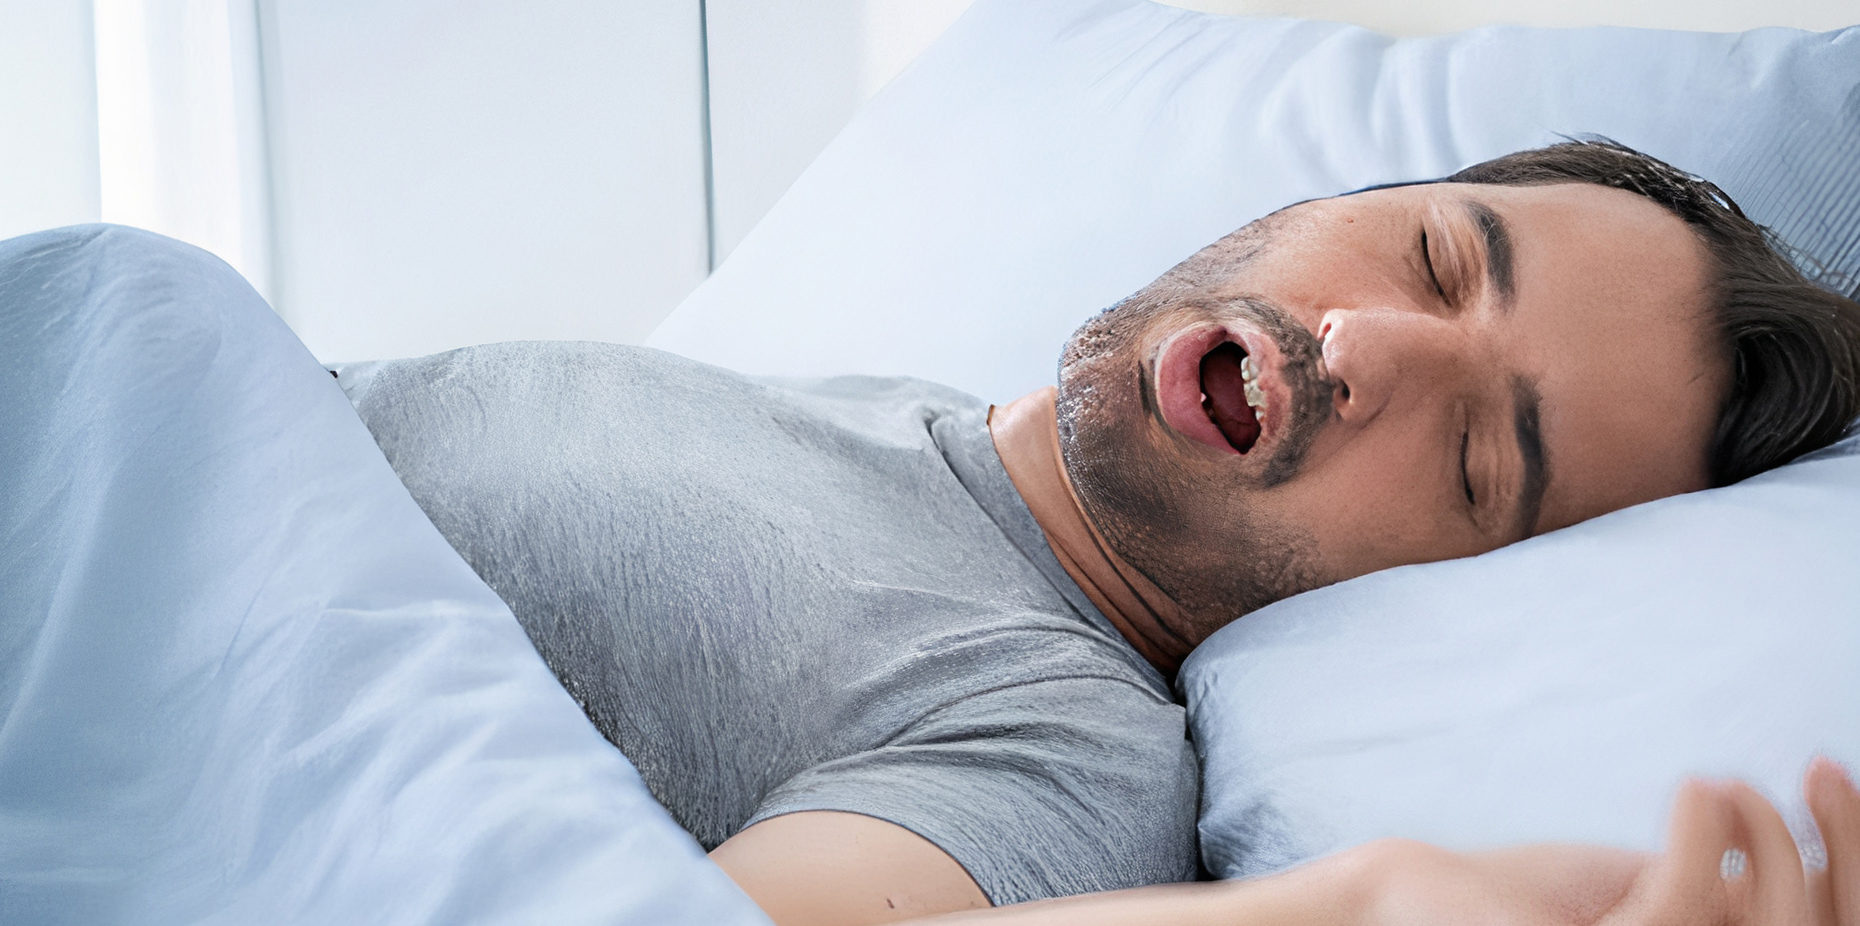 Central Sleep Apnea: Types, Symptoms, Causes, and Treatment